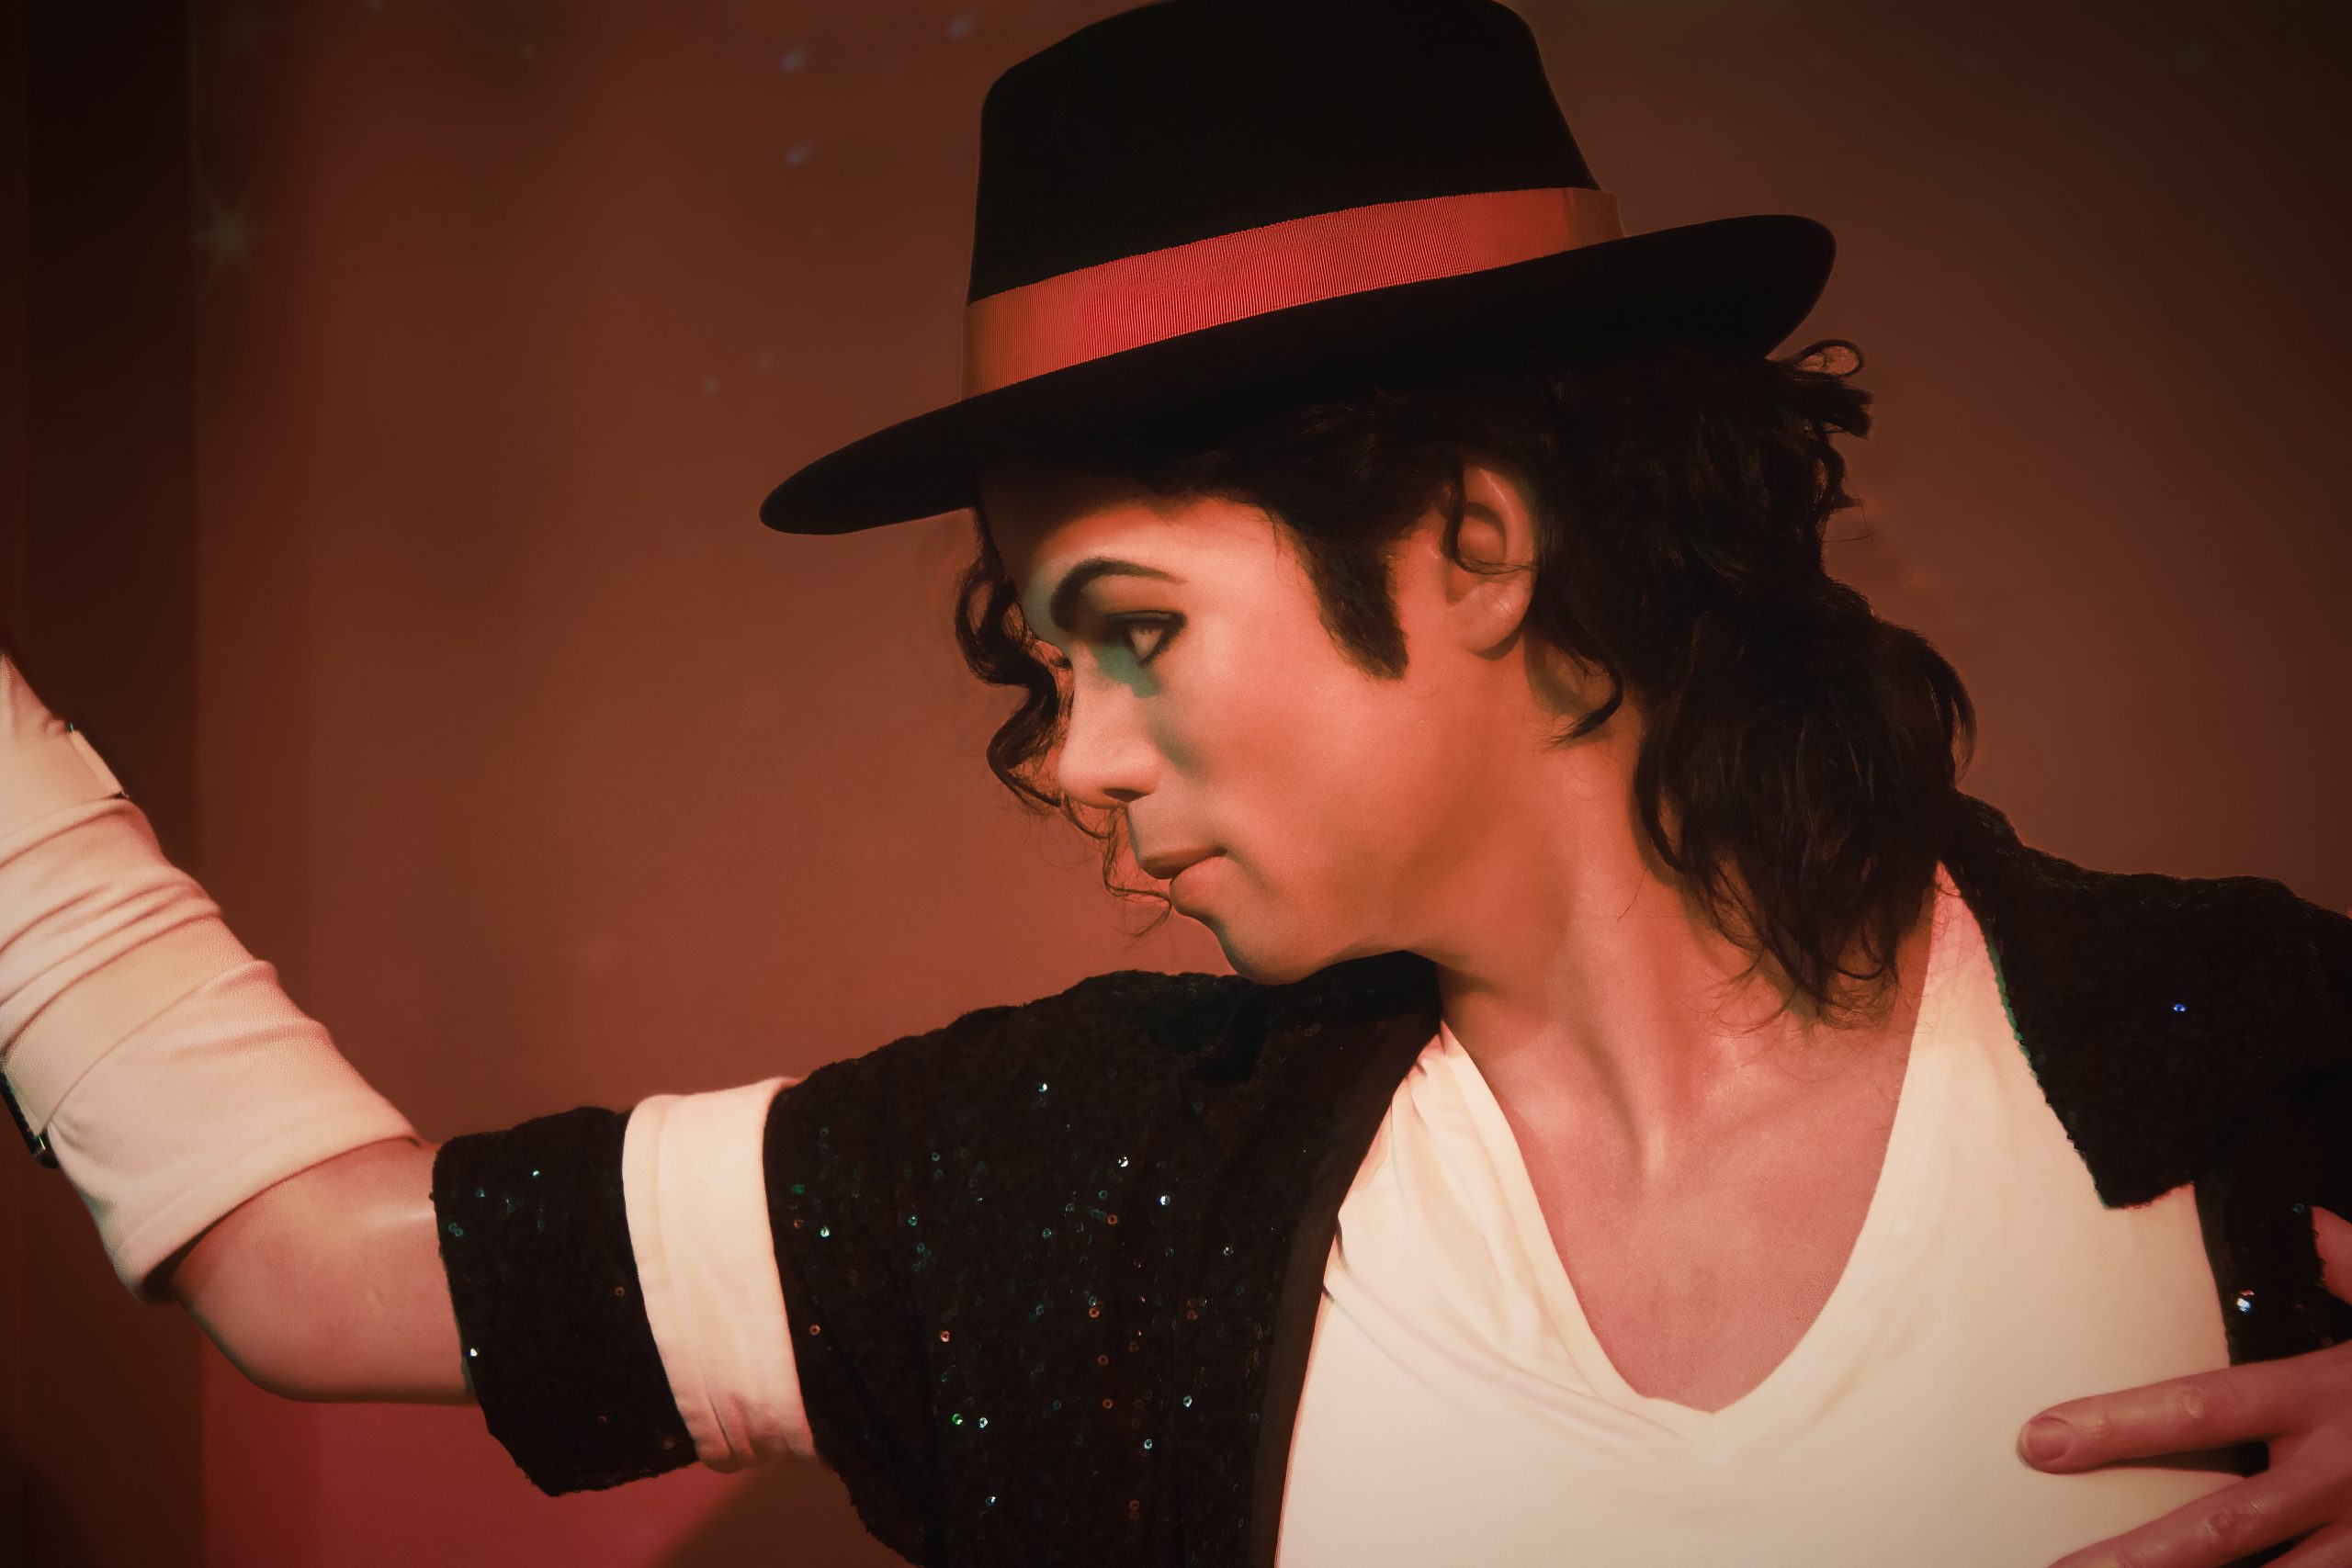 Waxwork of Michael Jackson on display at Madame Tussauds, Marylebone, London